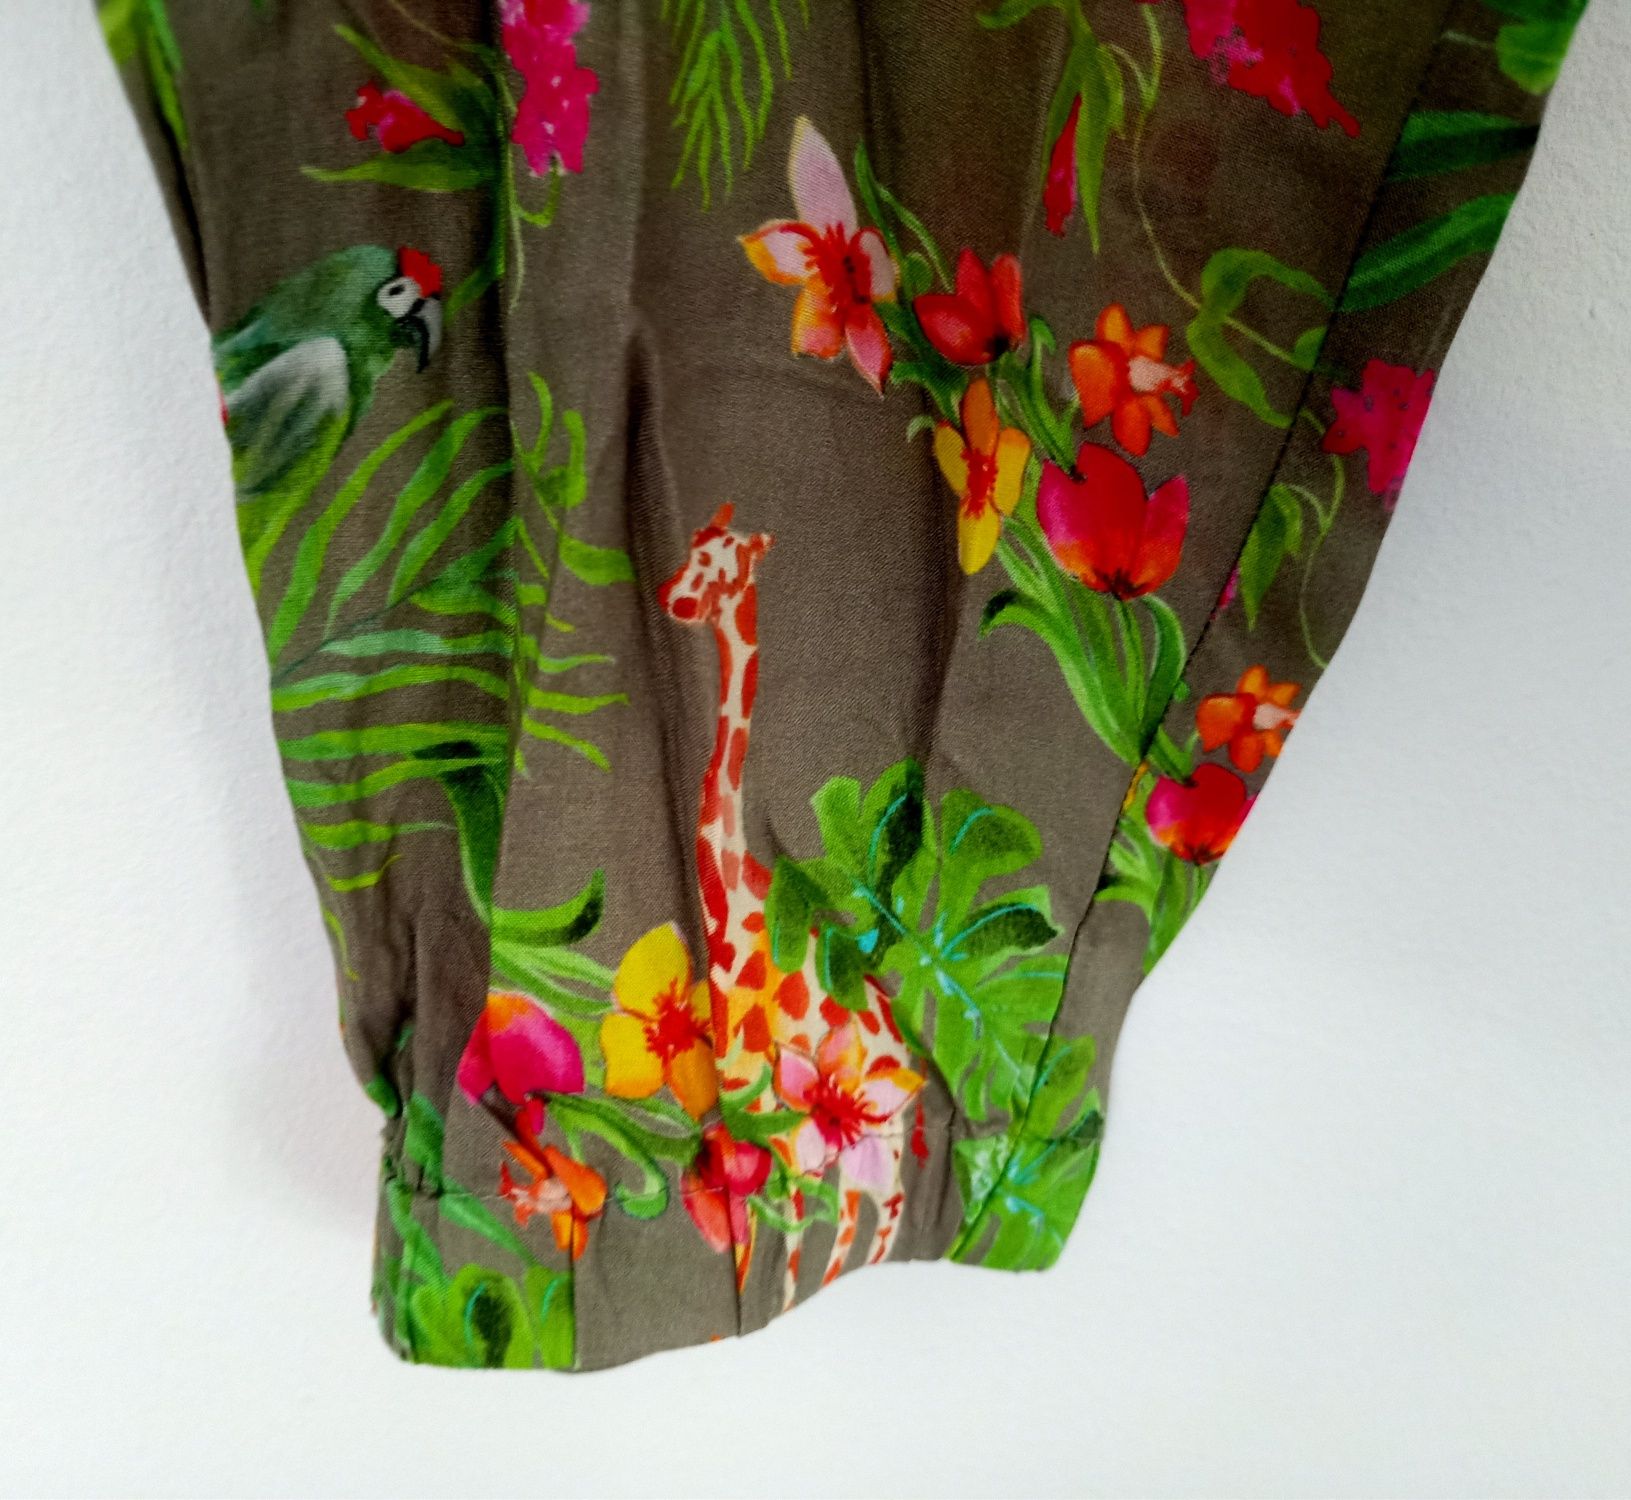 Letni kombinezon khaki w kolorowa dżunglę  oryginał margines 11/12 lat